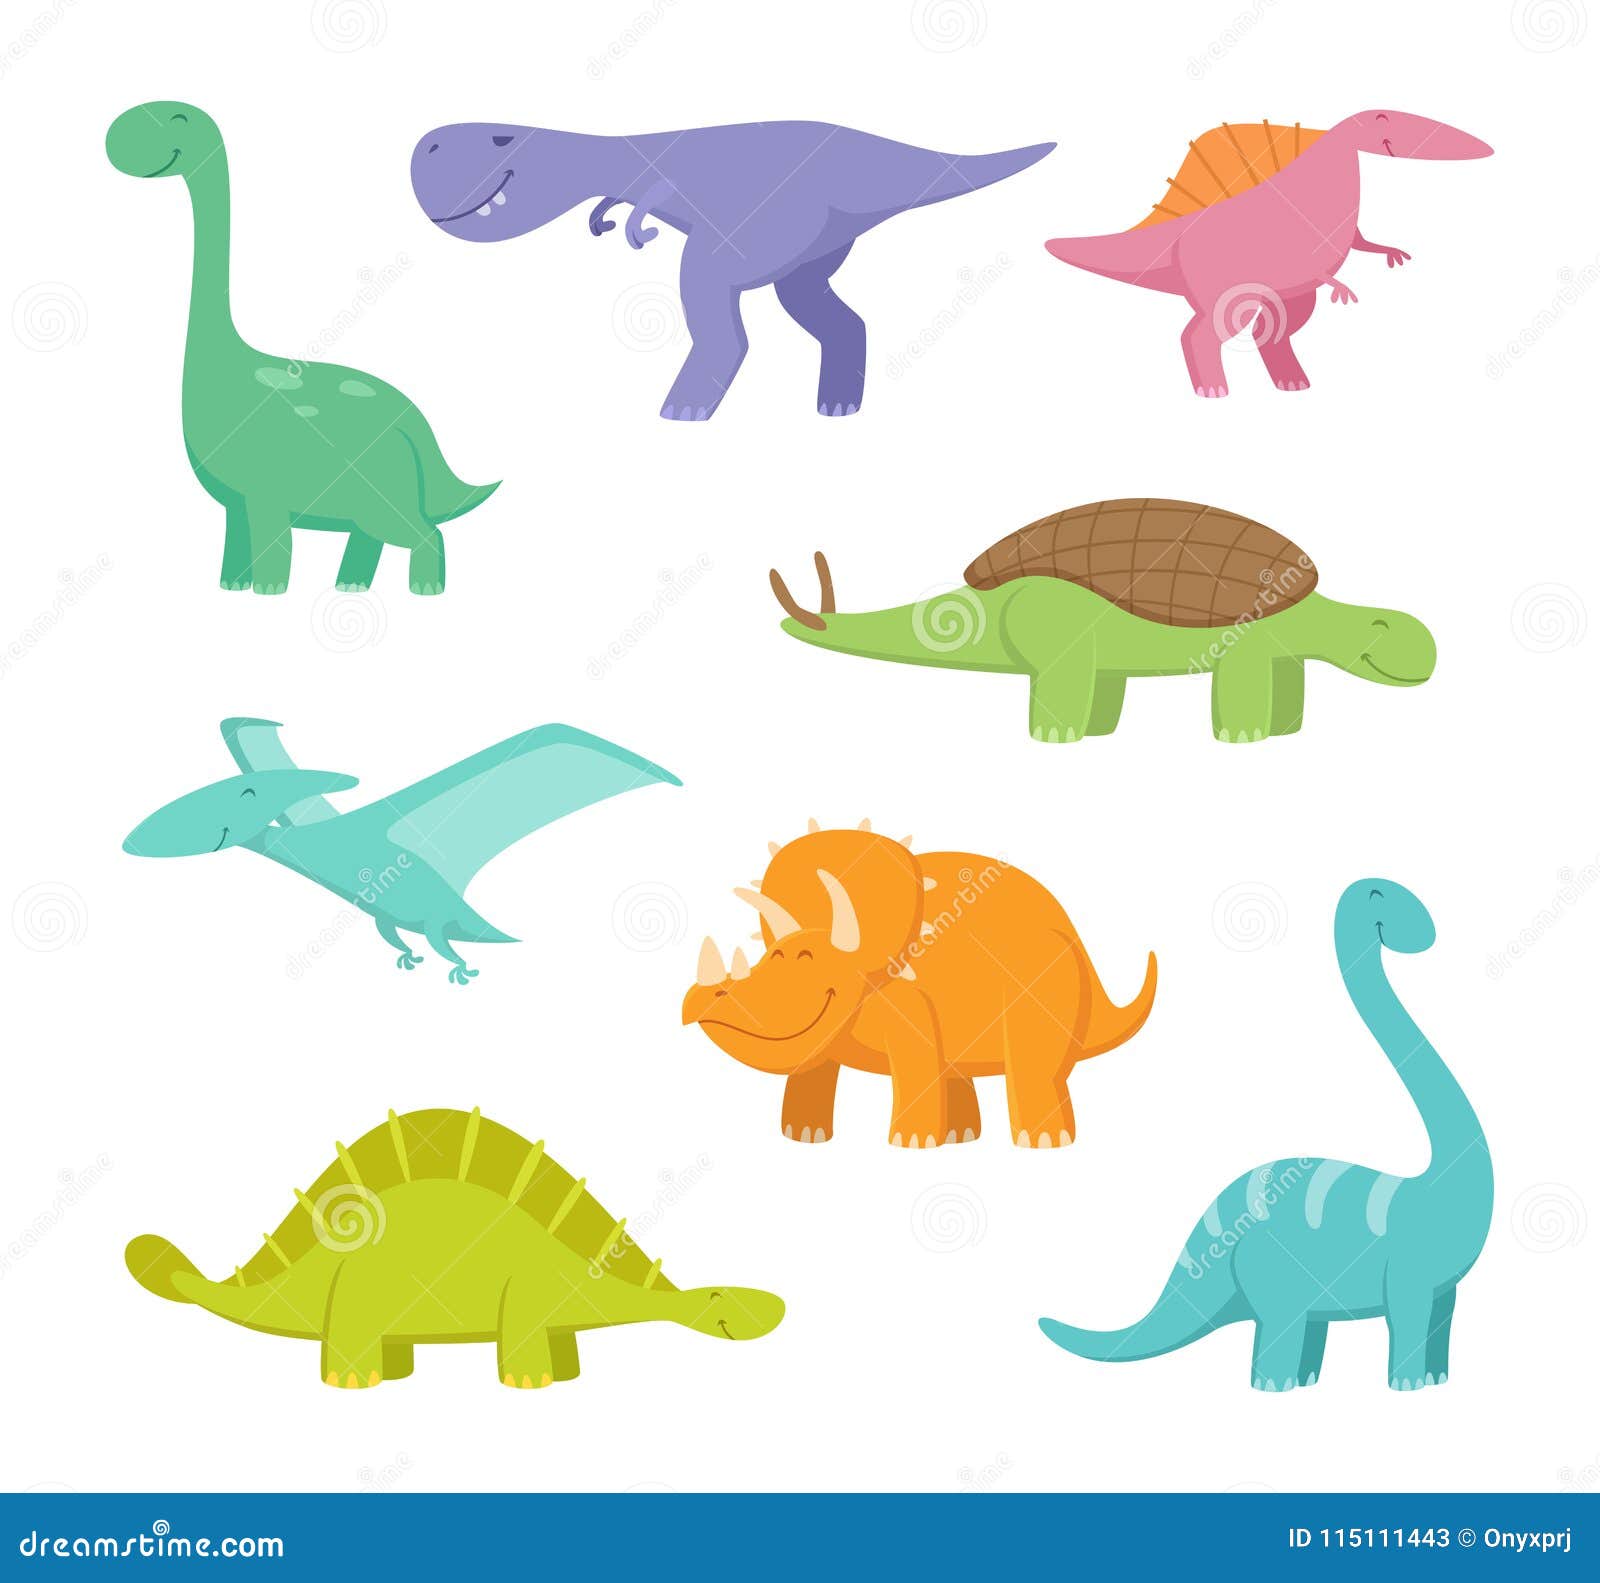 Cartoon Dragons and Dinosaurs Stock Vector - Illustration of design ...